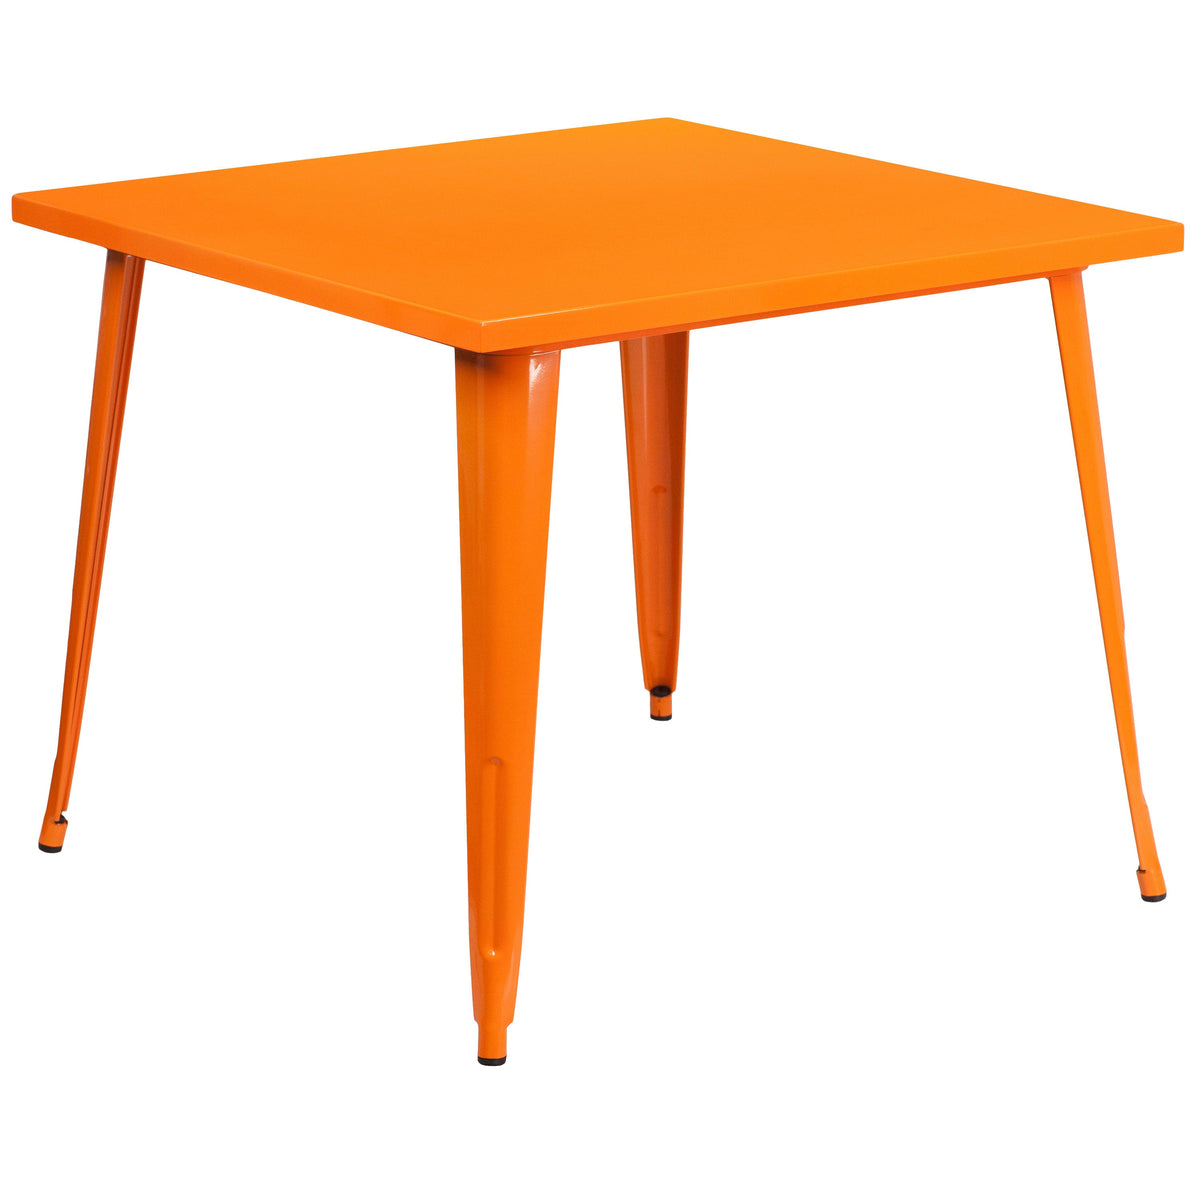 Orange |#| 35.5inch Square Orange Metal Indoor-Outdoor Table - Industrial Table